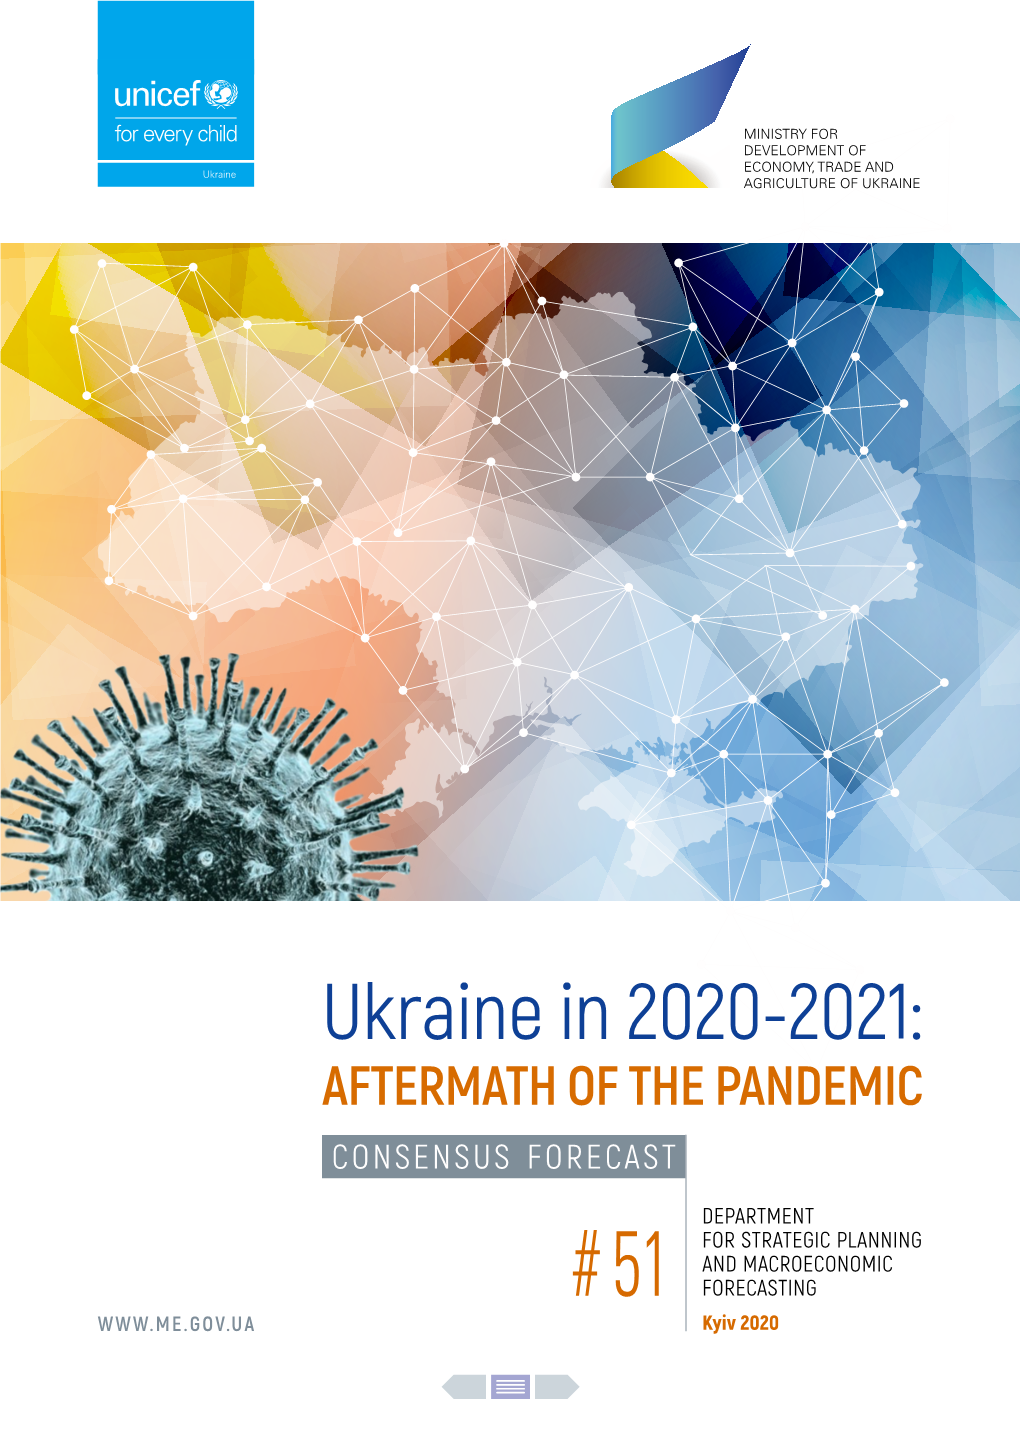 Ukraine in 2020-2021: Aft Ermath of the Pandemic Consensus Forecast